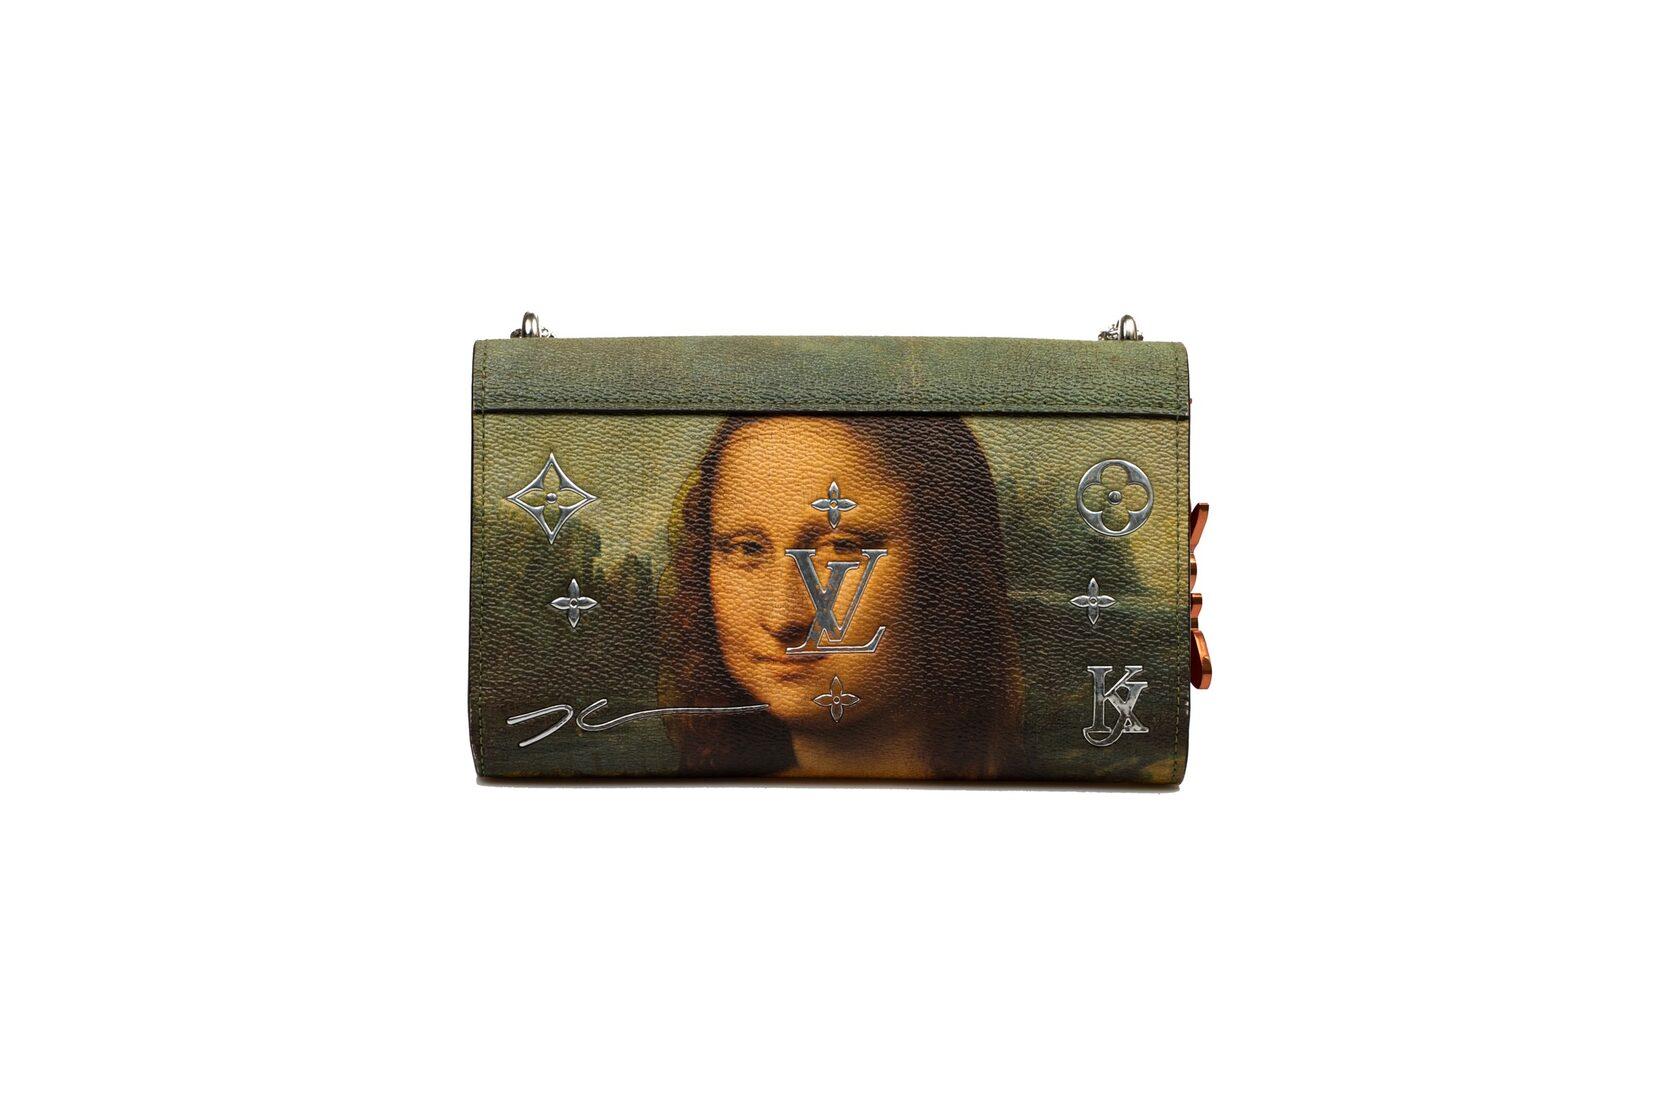 Louis Vuitton Chain Bag Limited Edition with designer Jeff Coons - Da Vinci For Sale 3